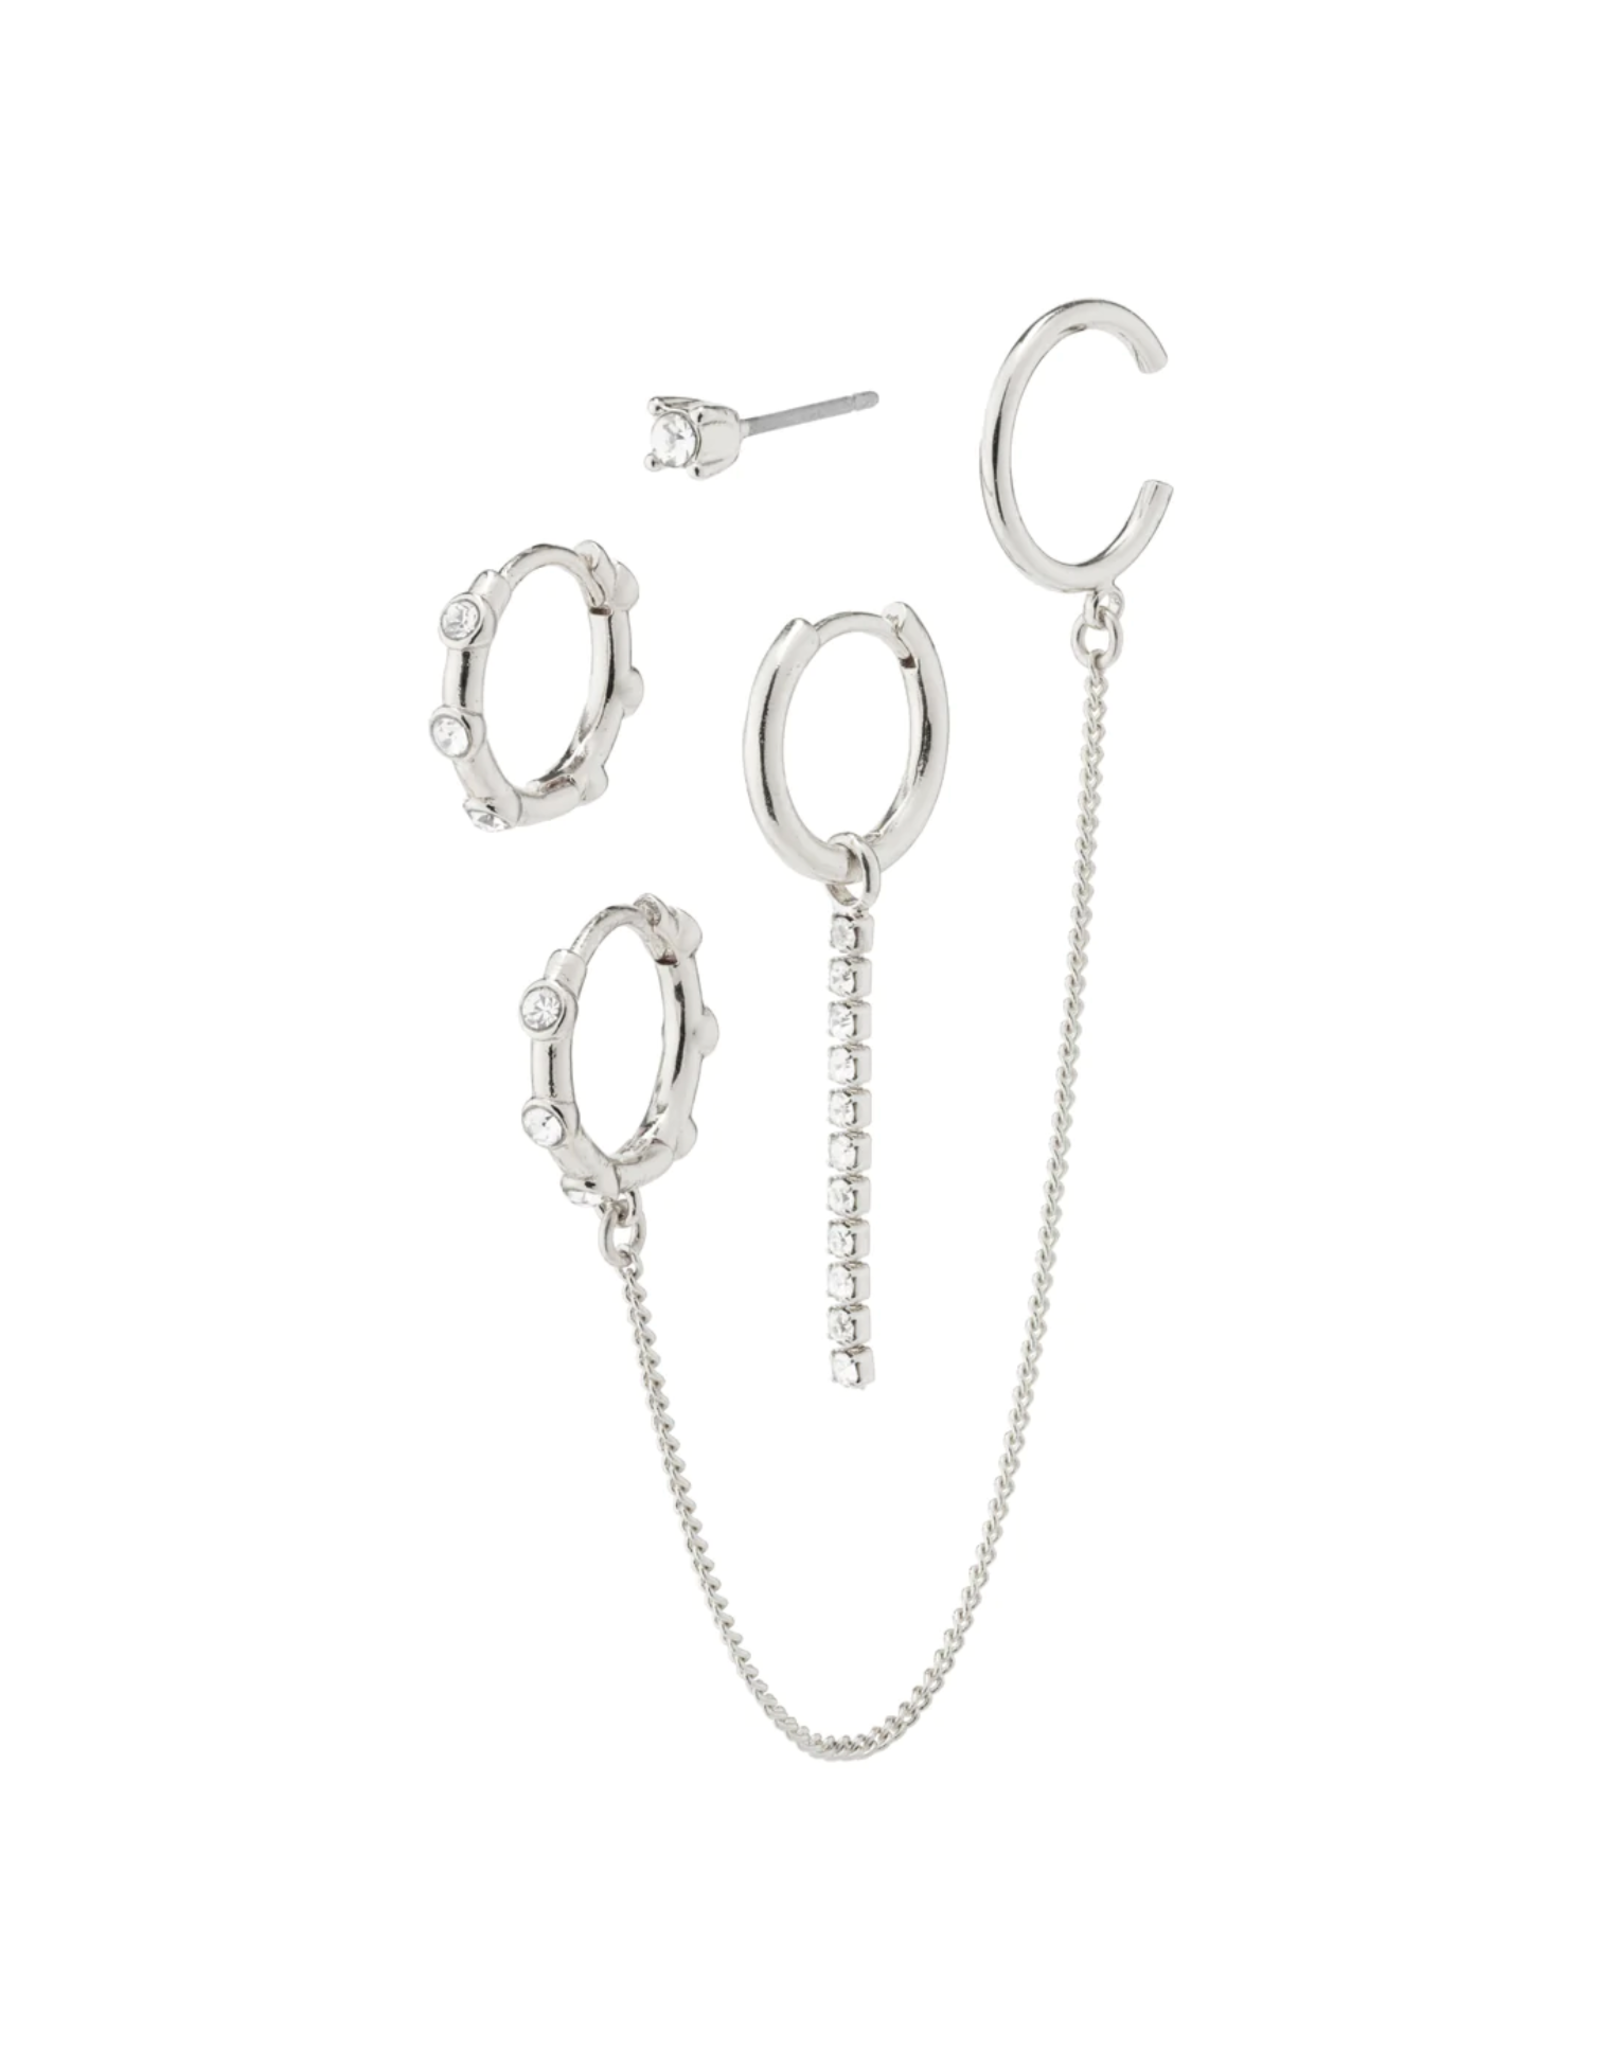 Pilgrim SIV earrings 4-in-1 set silver-plated